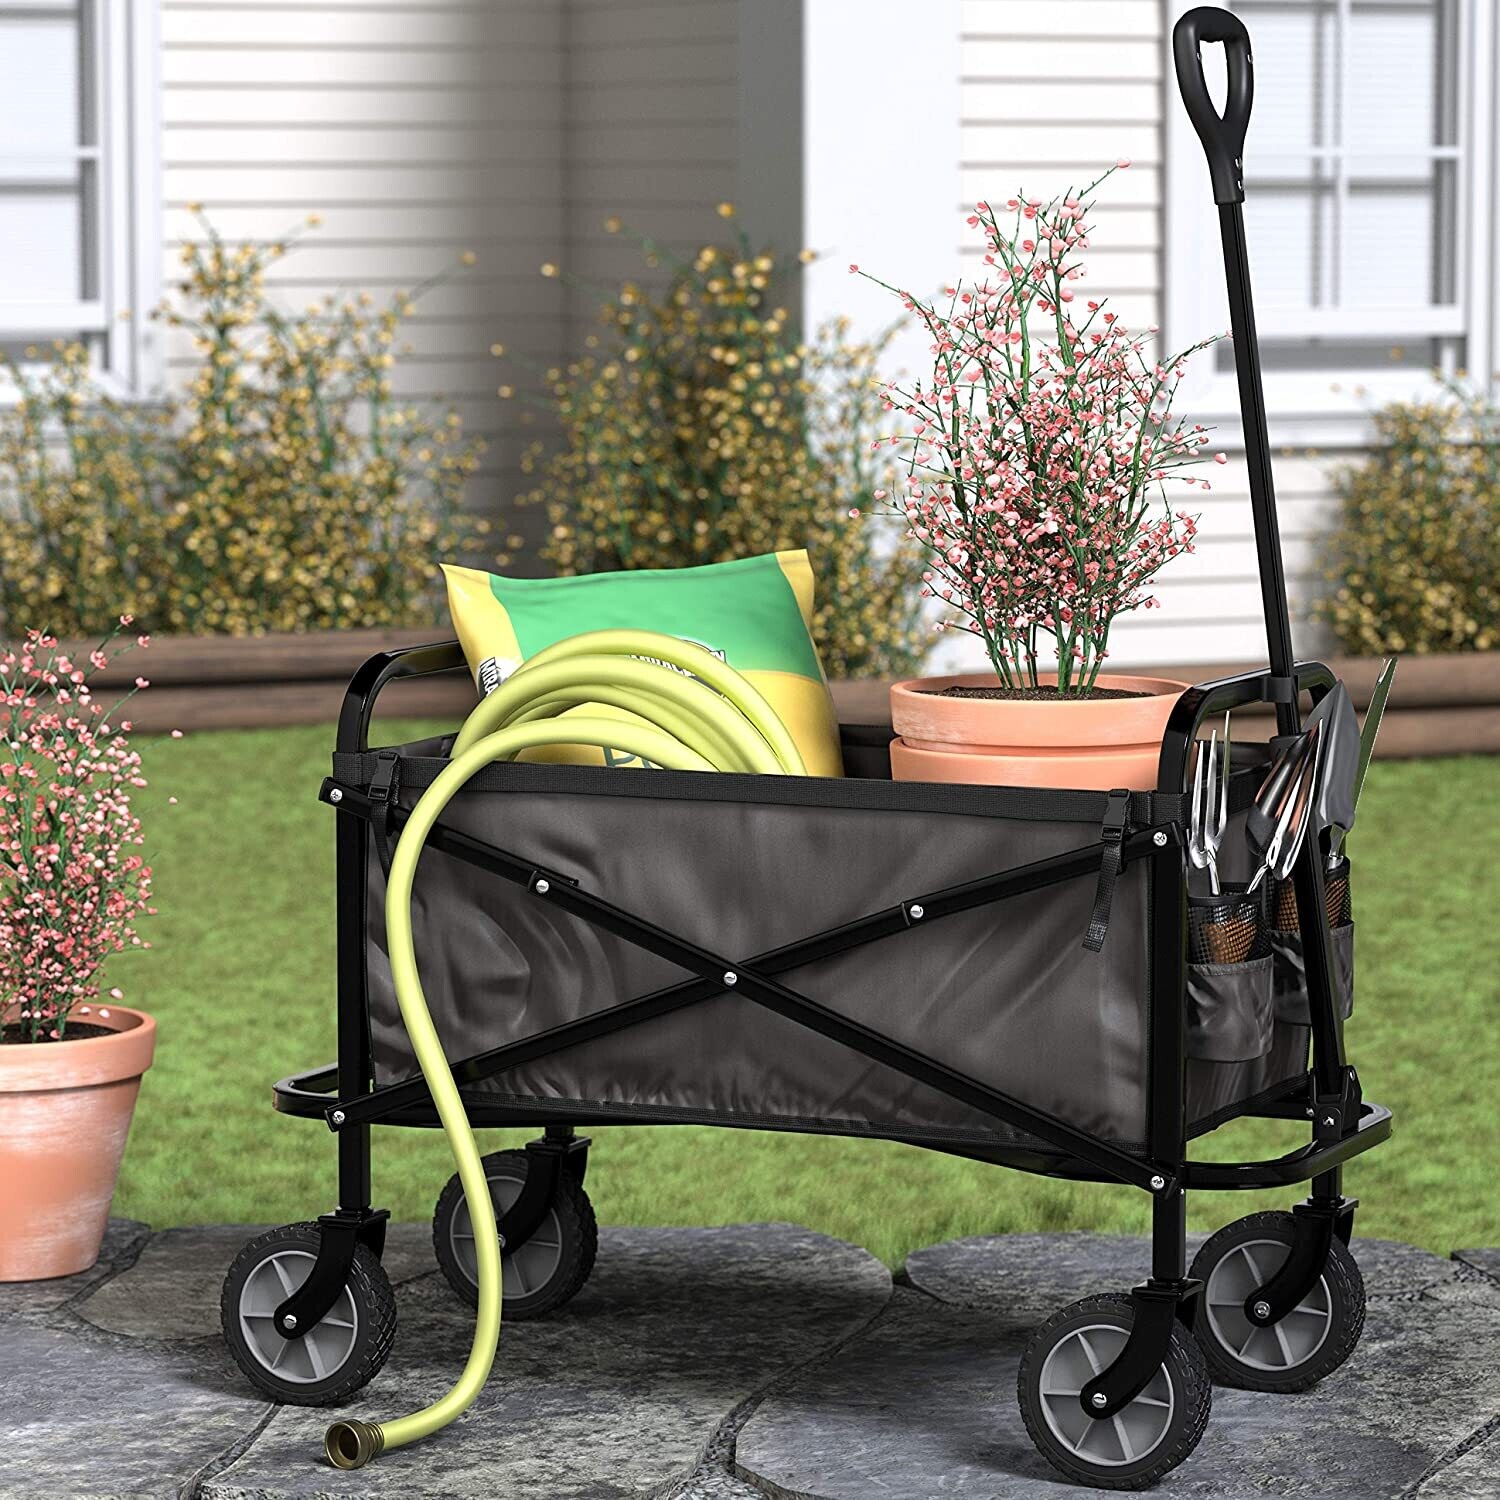 Outdoor Garden Cart with Cover Black